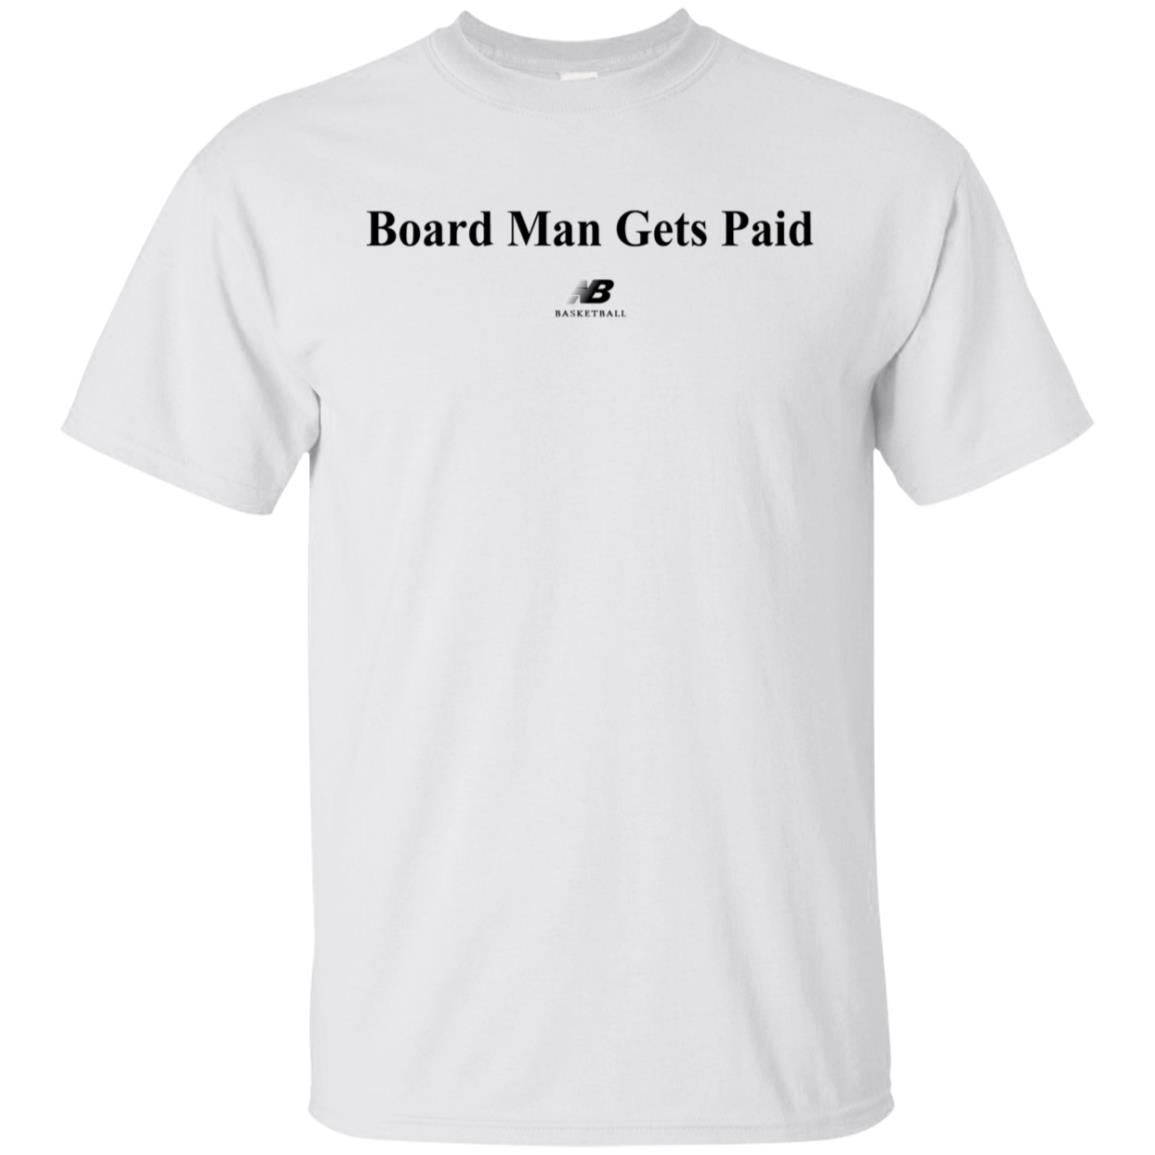 bored man gets paid shirt new balance 